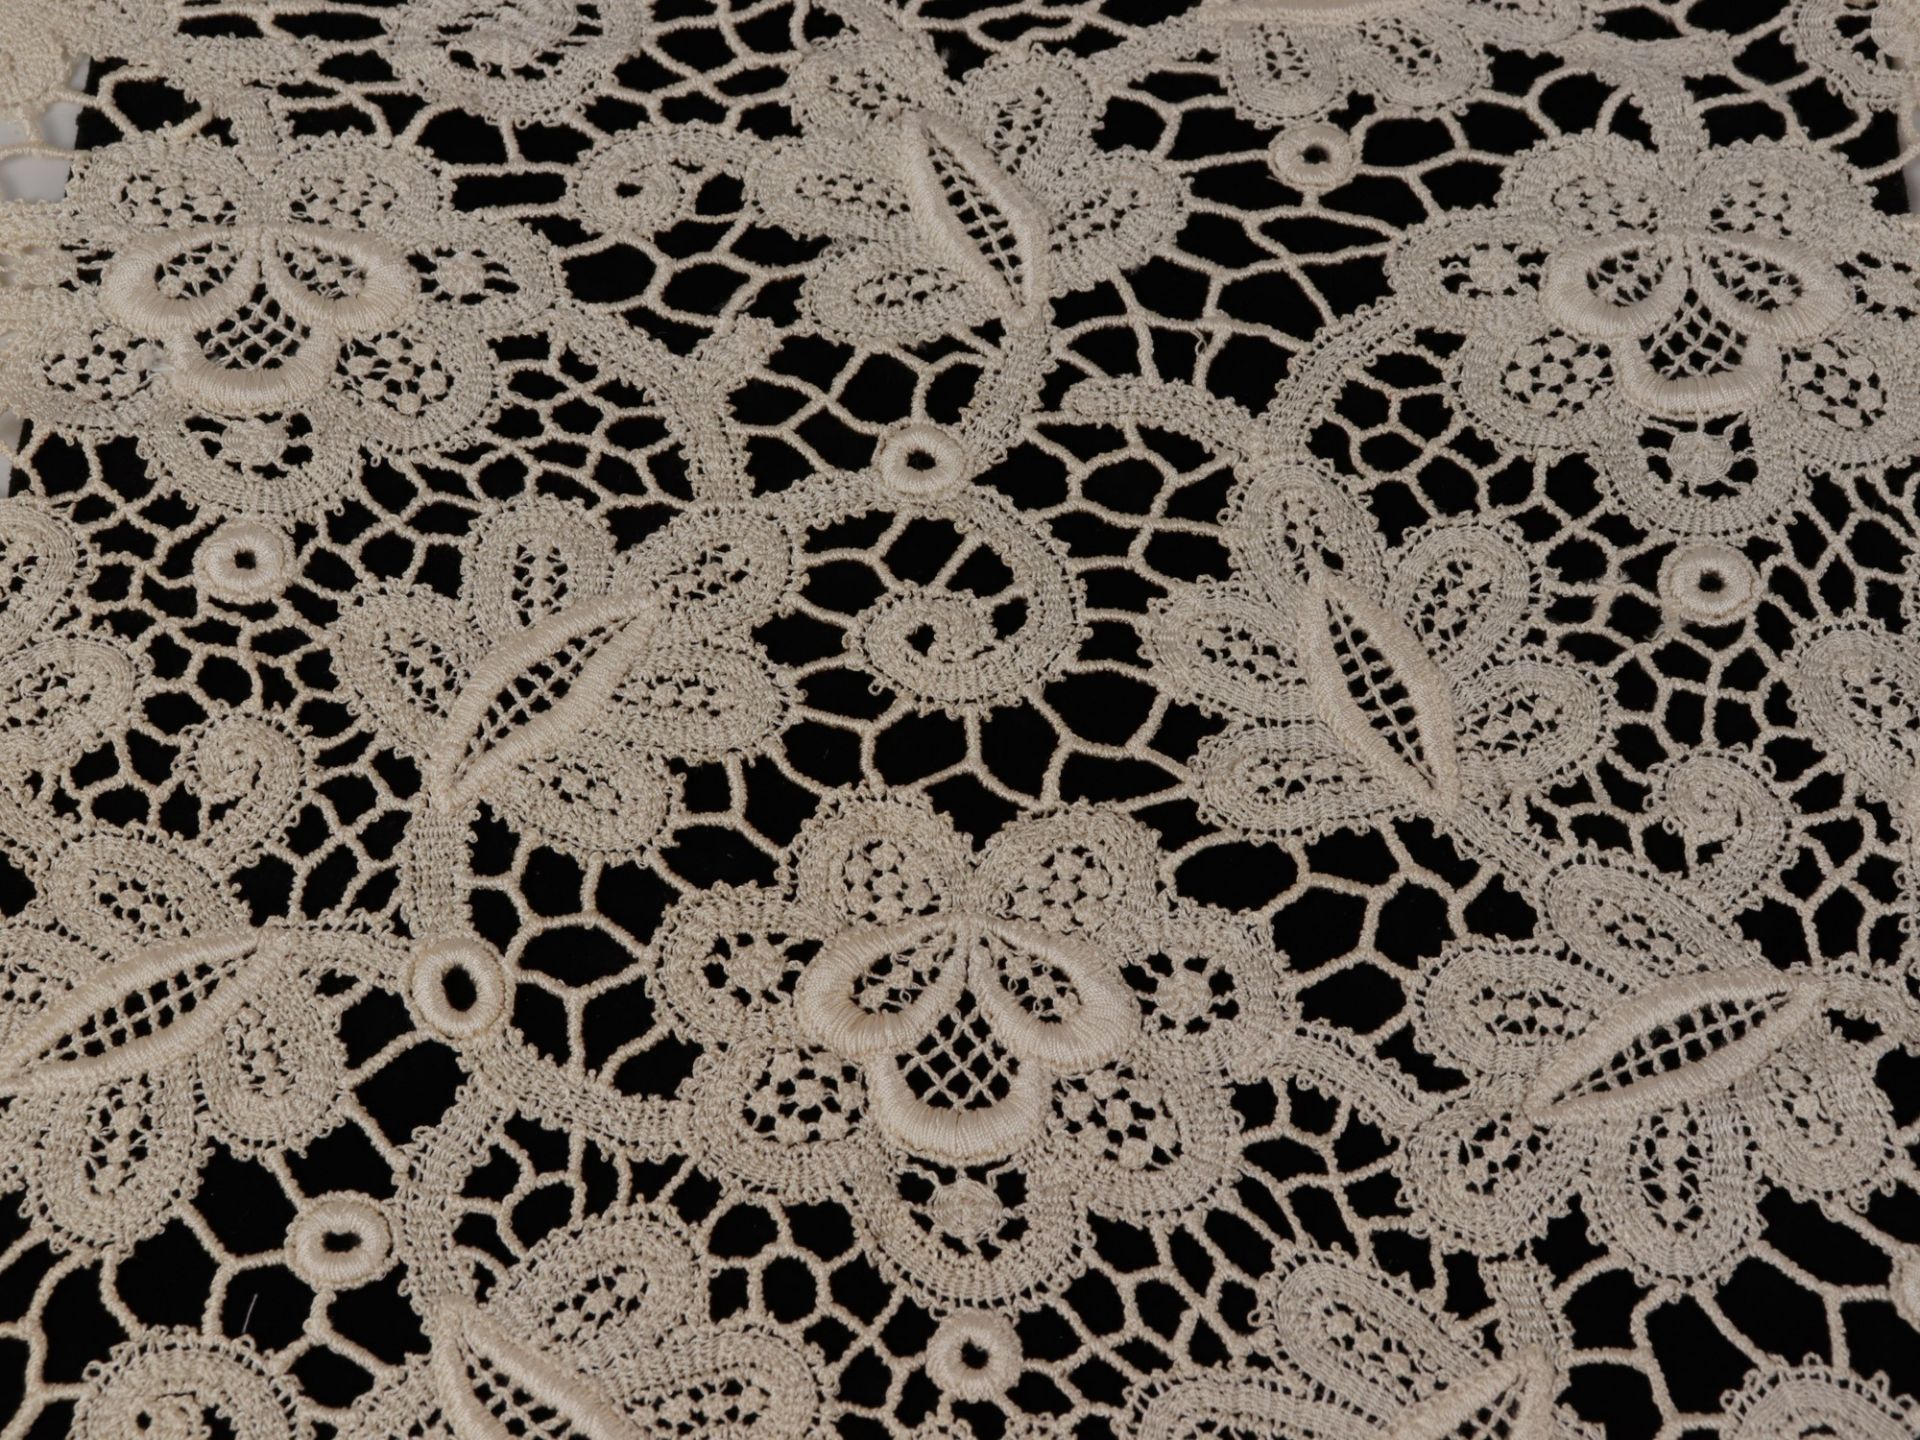 Plauener Spitze - Meterware cremeweiß, florales Muster, Bogenkante, 3 breite Borten, Liegeflecken, - Image 2 of 2